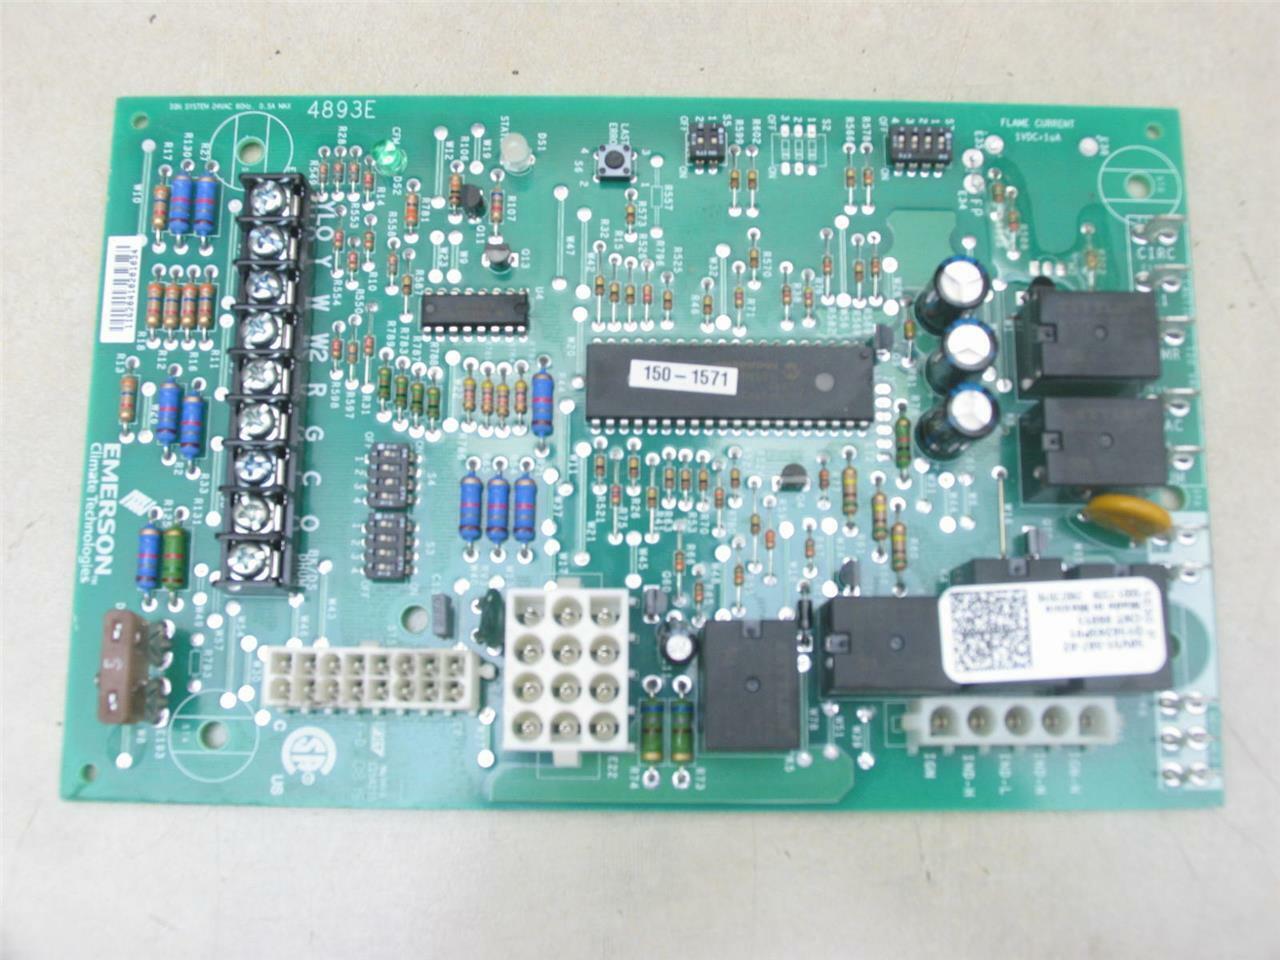 Trane Emerson 50V51-507-02 Furnace Control Circuit Board D156245P01 CNT06015